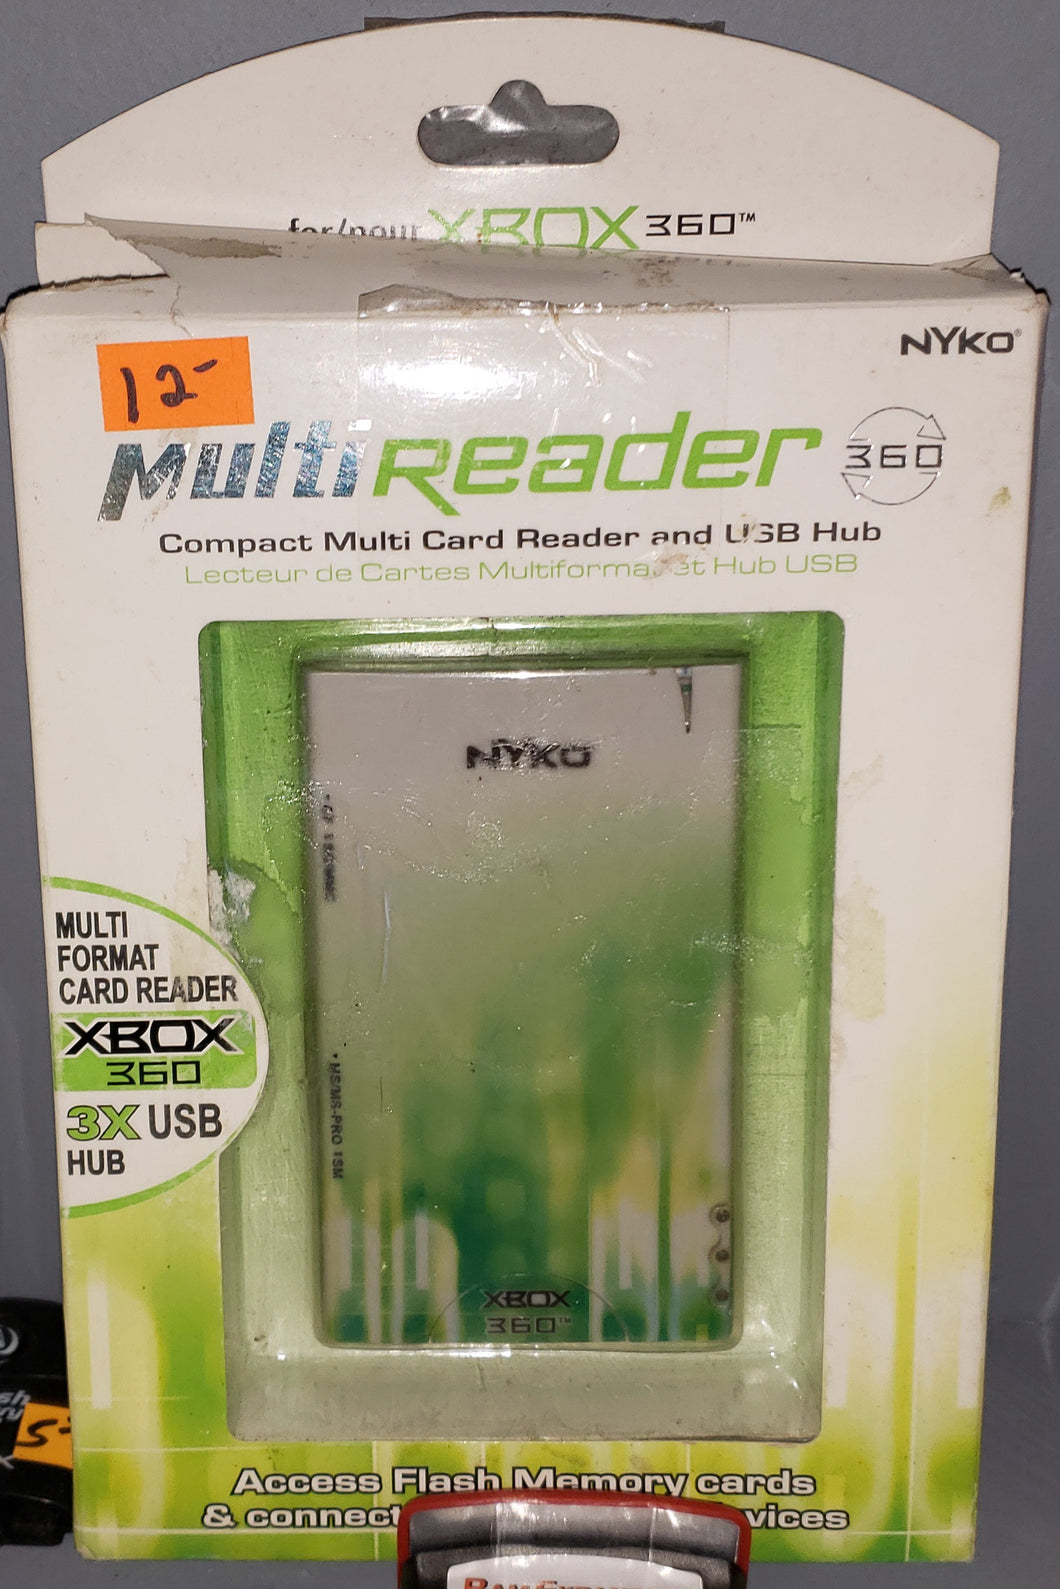 Nyko Xbox 360 Compact Multi Card Reader and USB Hub